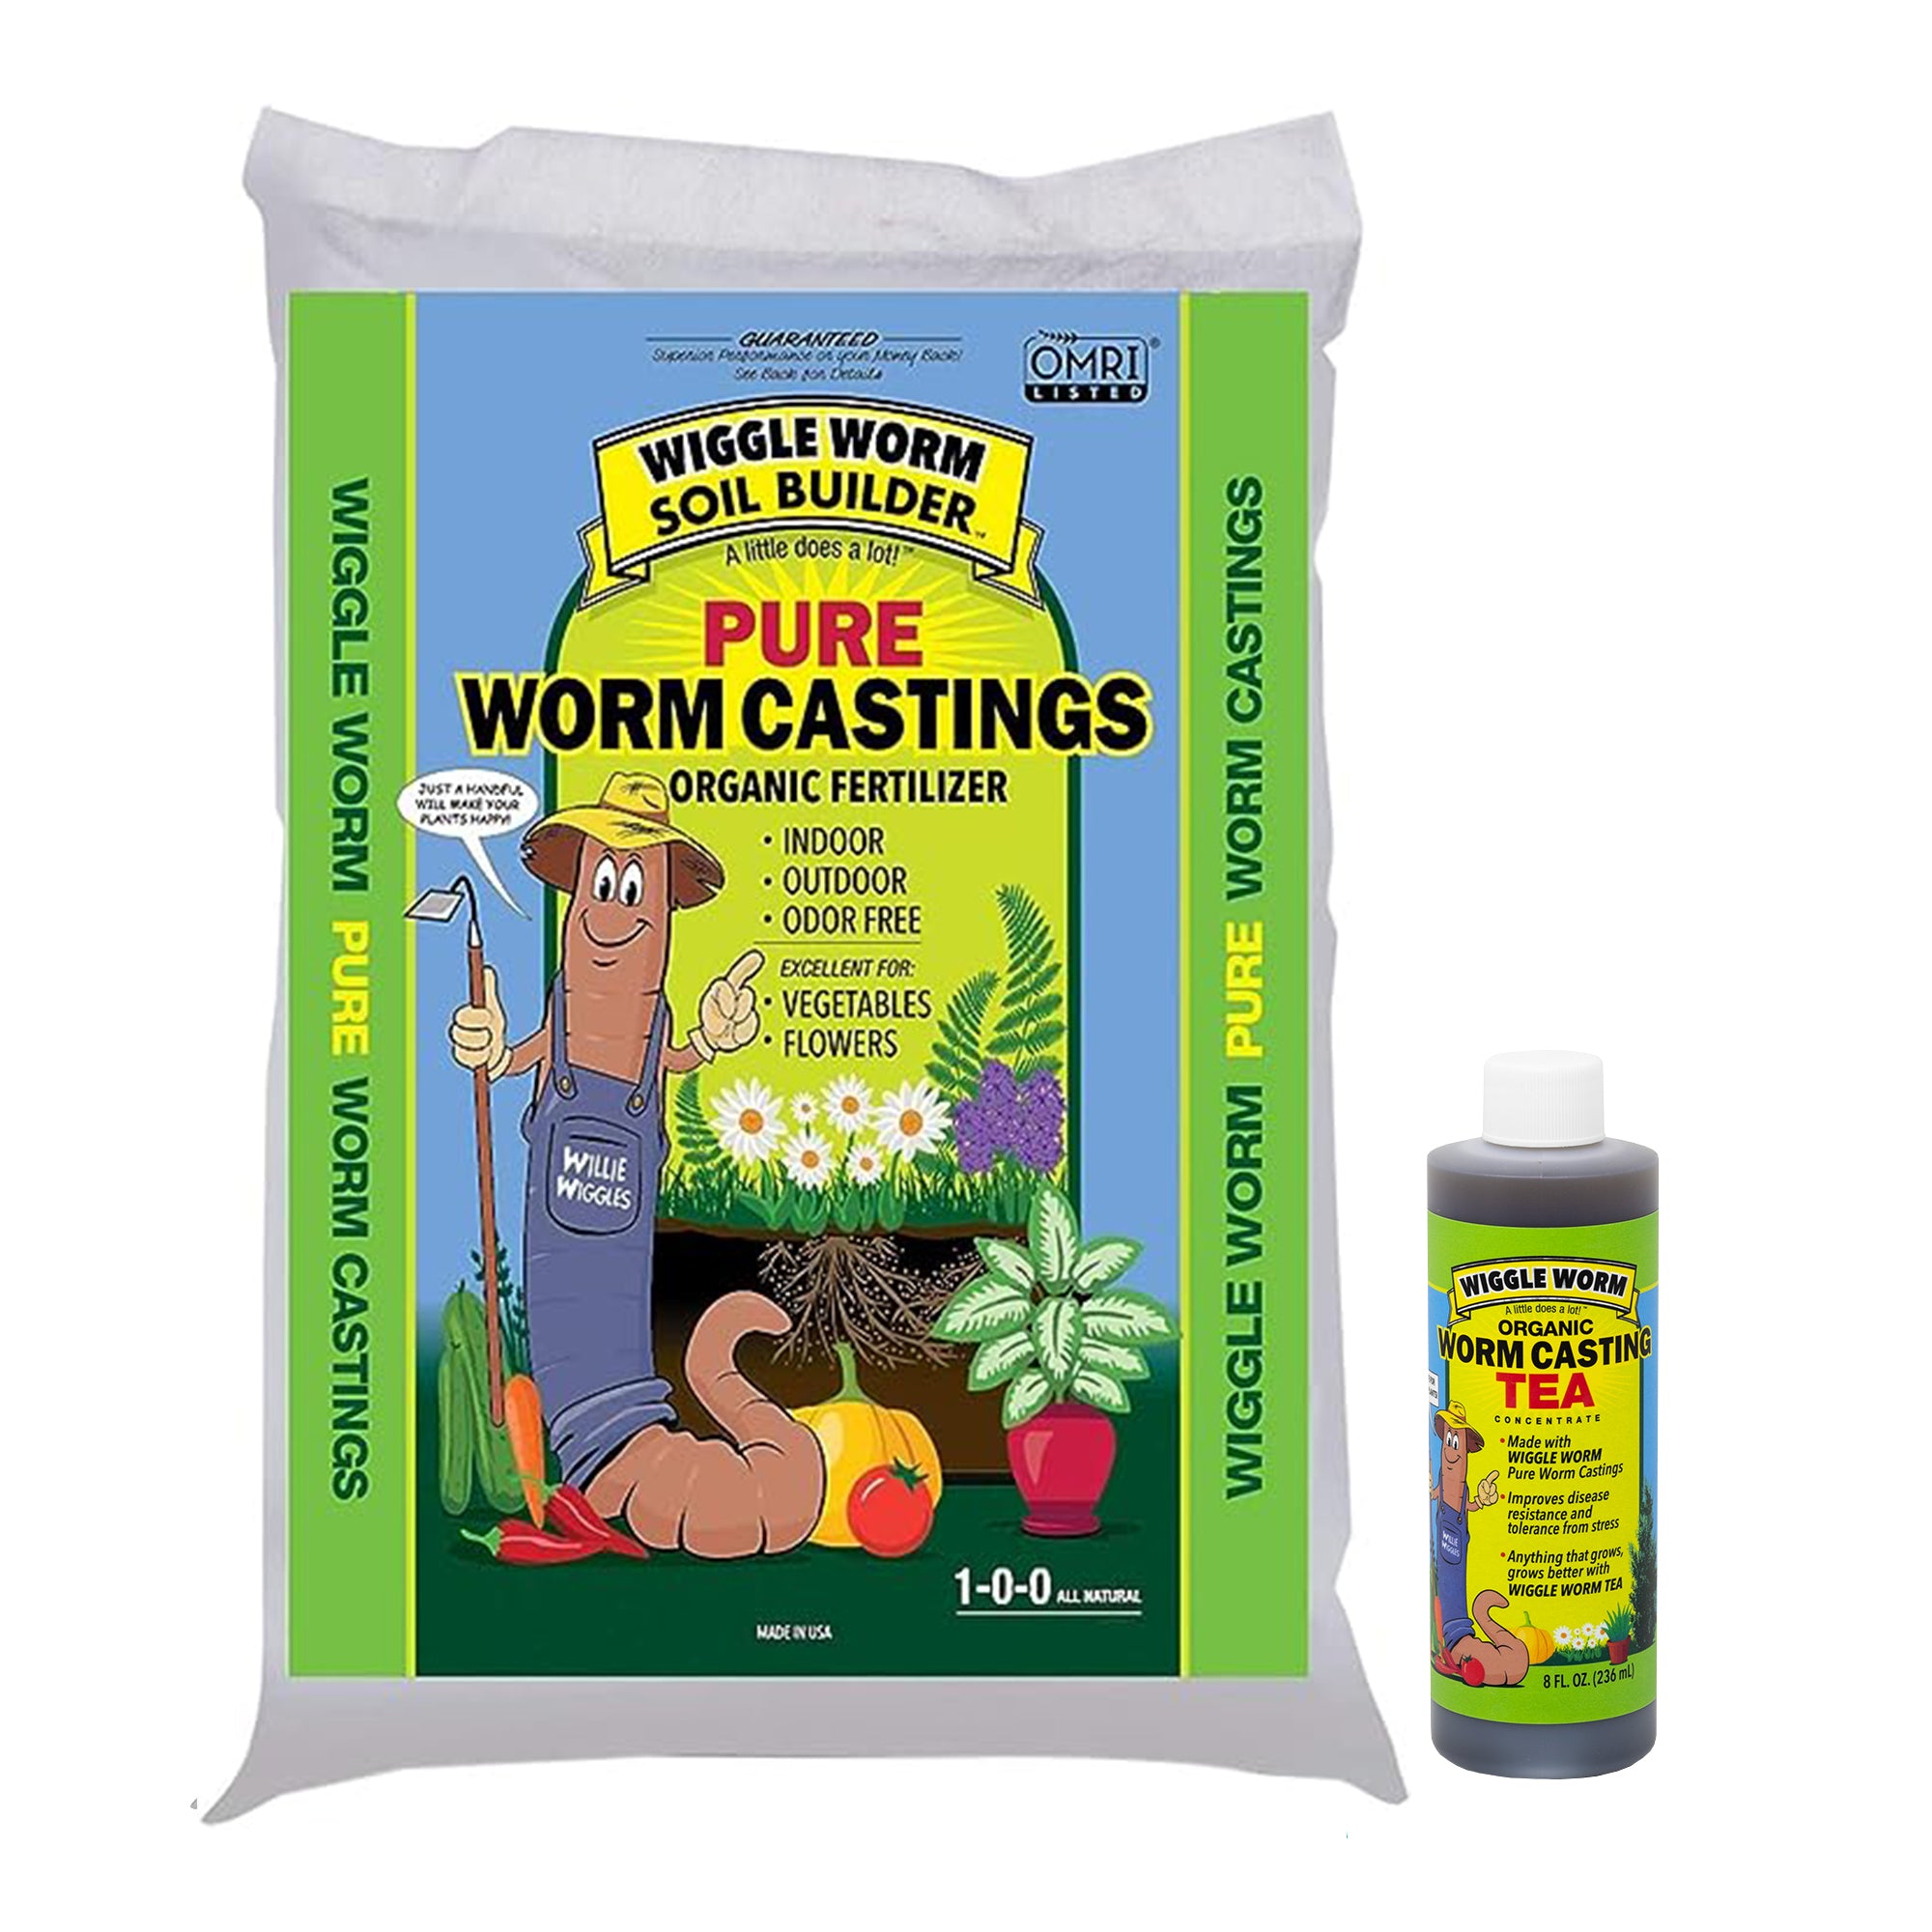 WIGGLE WORM Unco Industries Builder Worm Castings Soil (30 Pound) and WIGGLE WORM Castings Tea, 8 Ounce